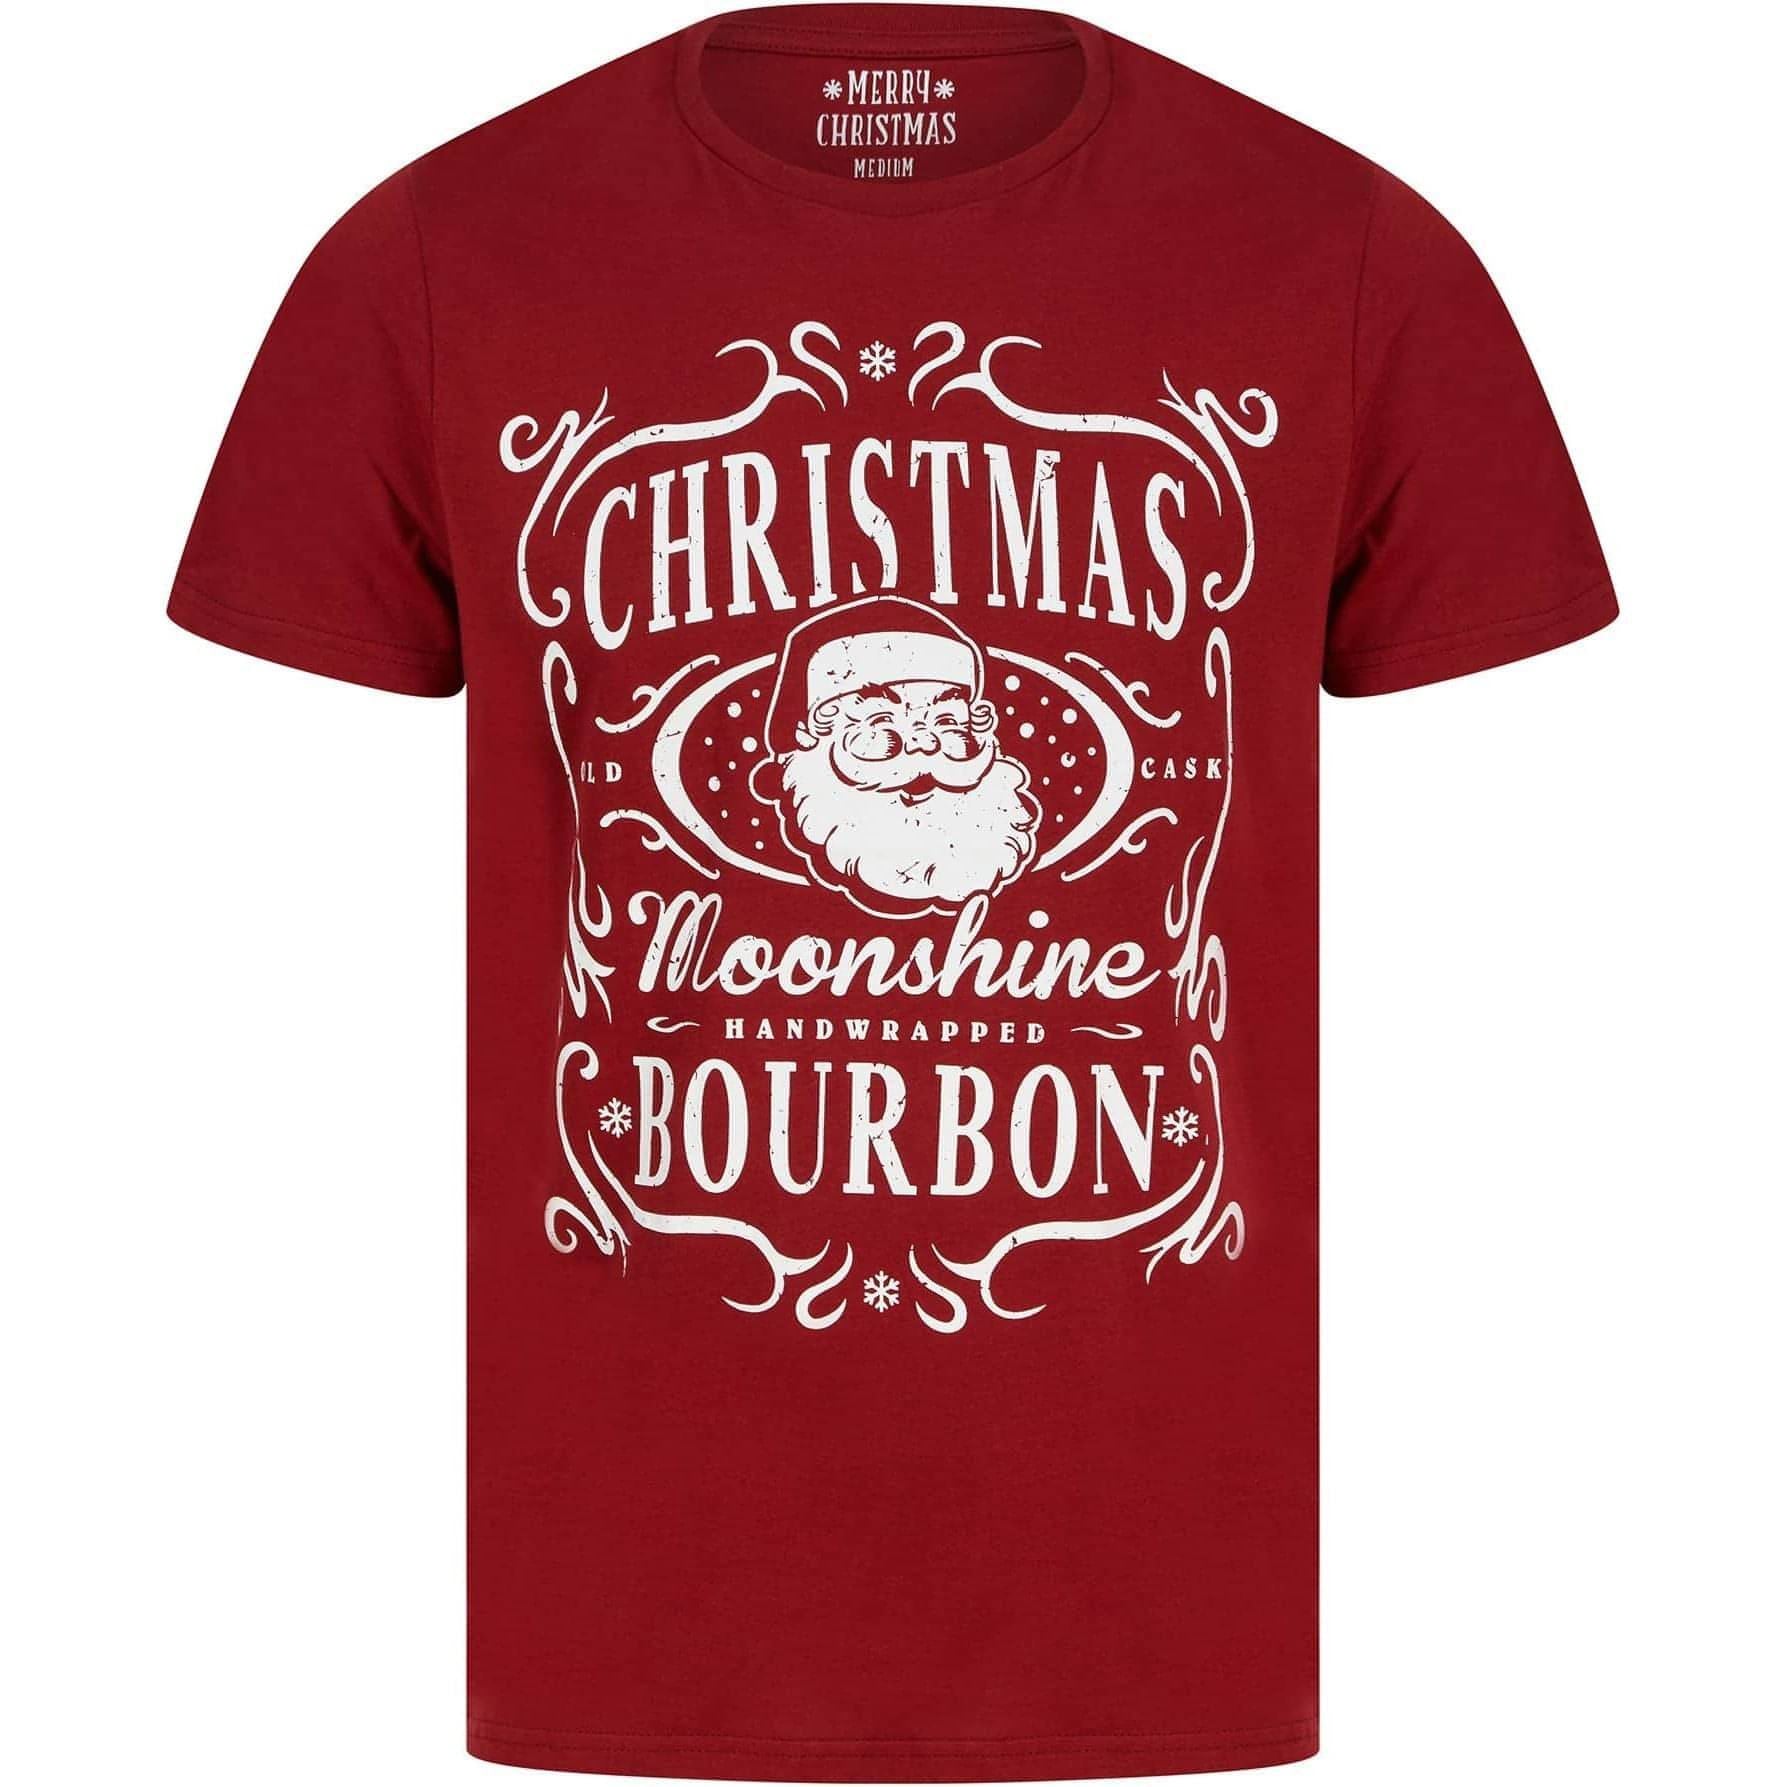 Christmas Bourbon Short Sleeve  Red